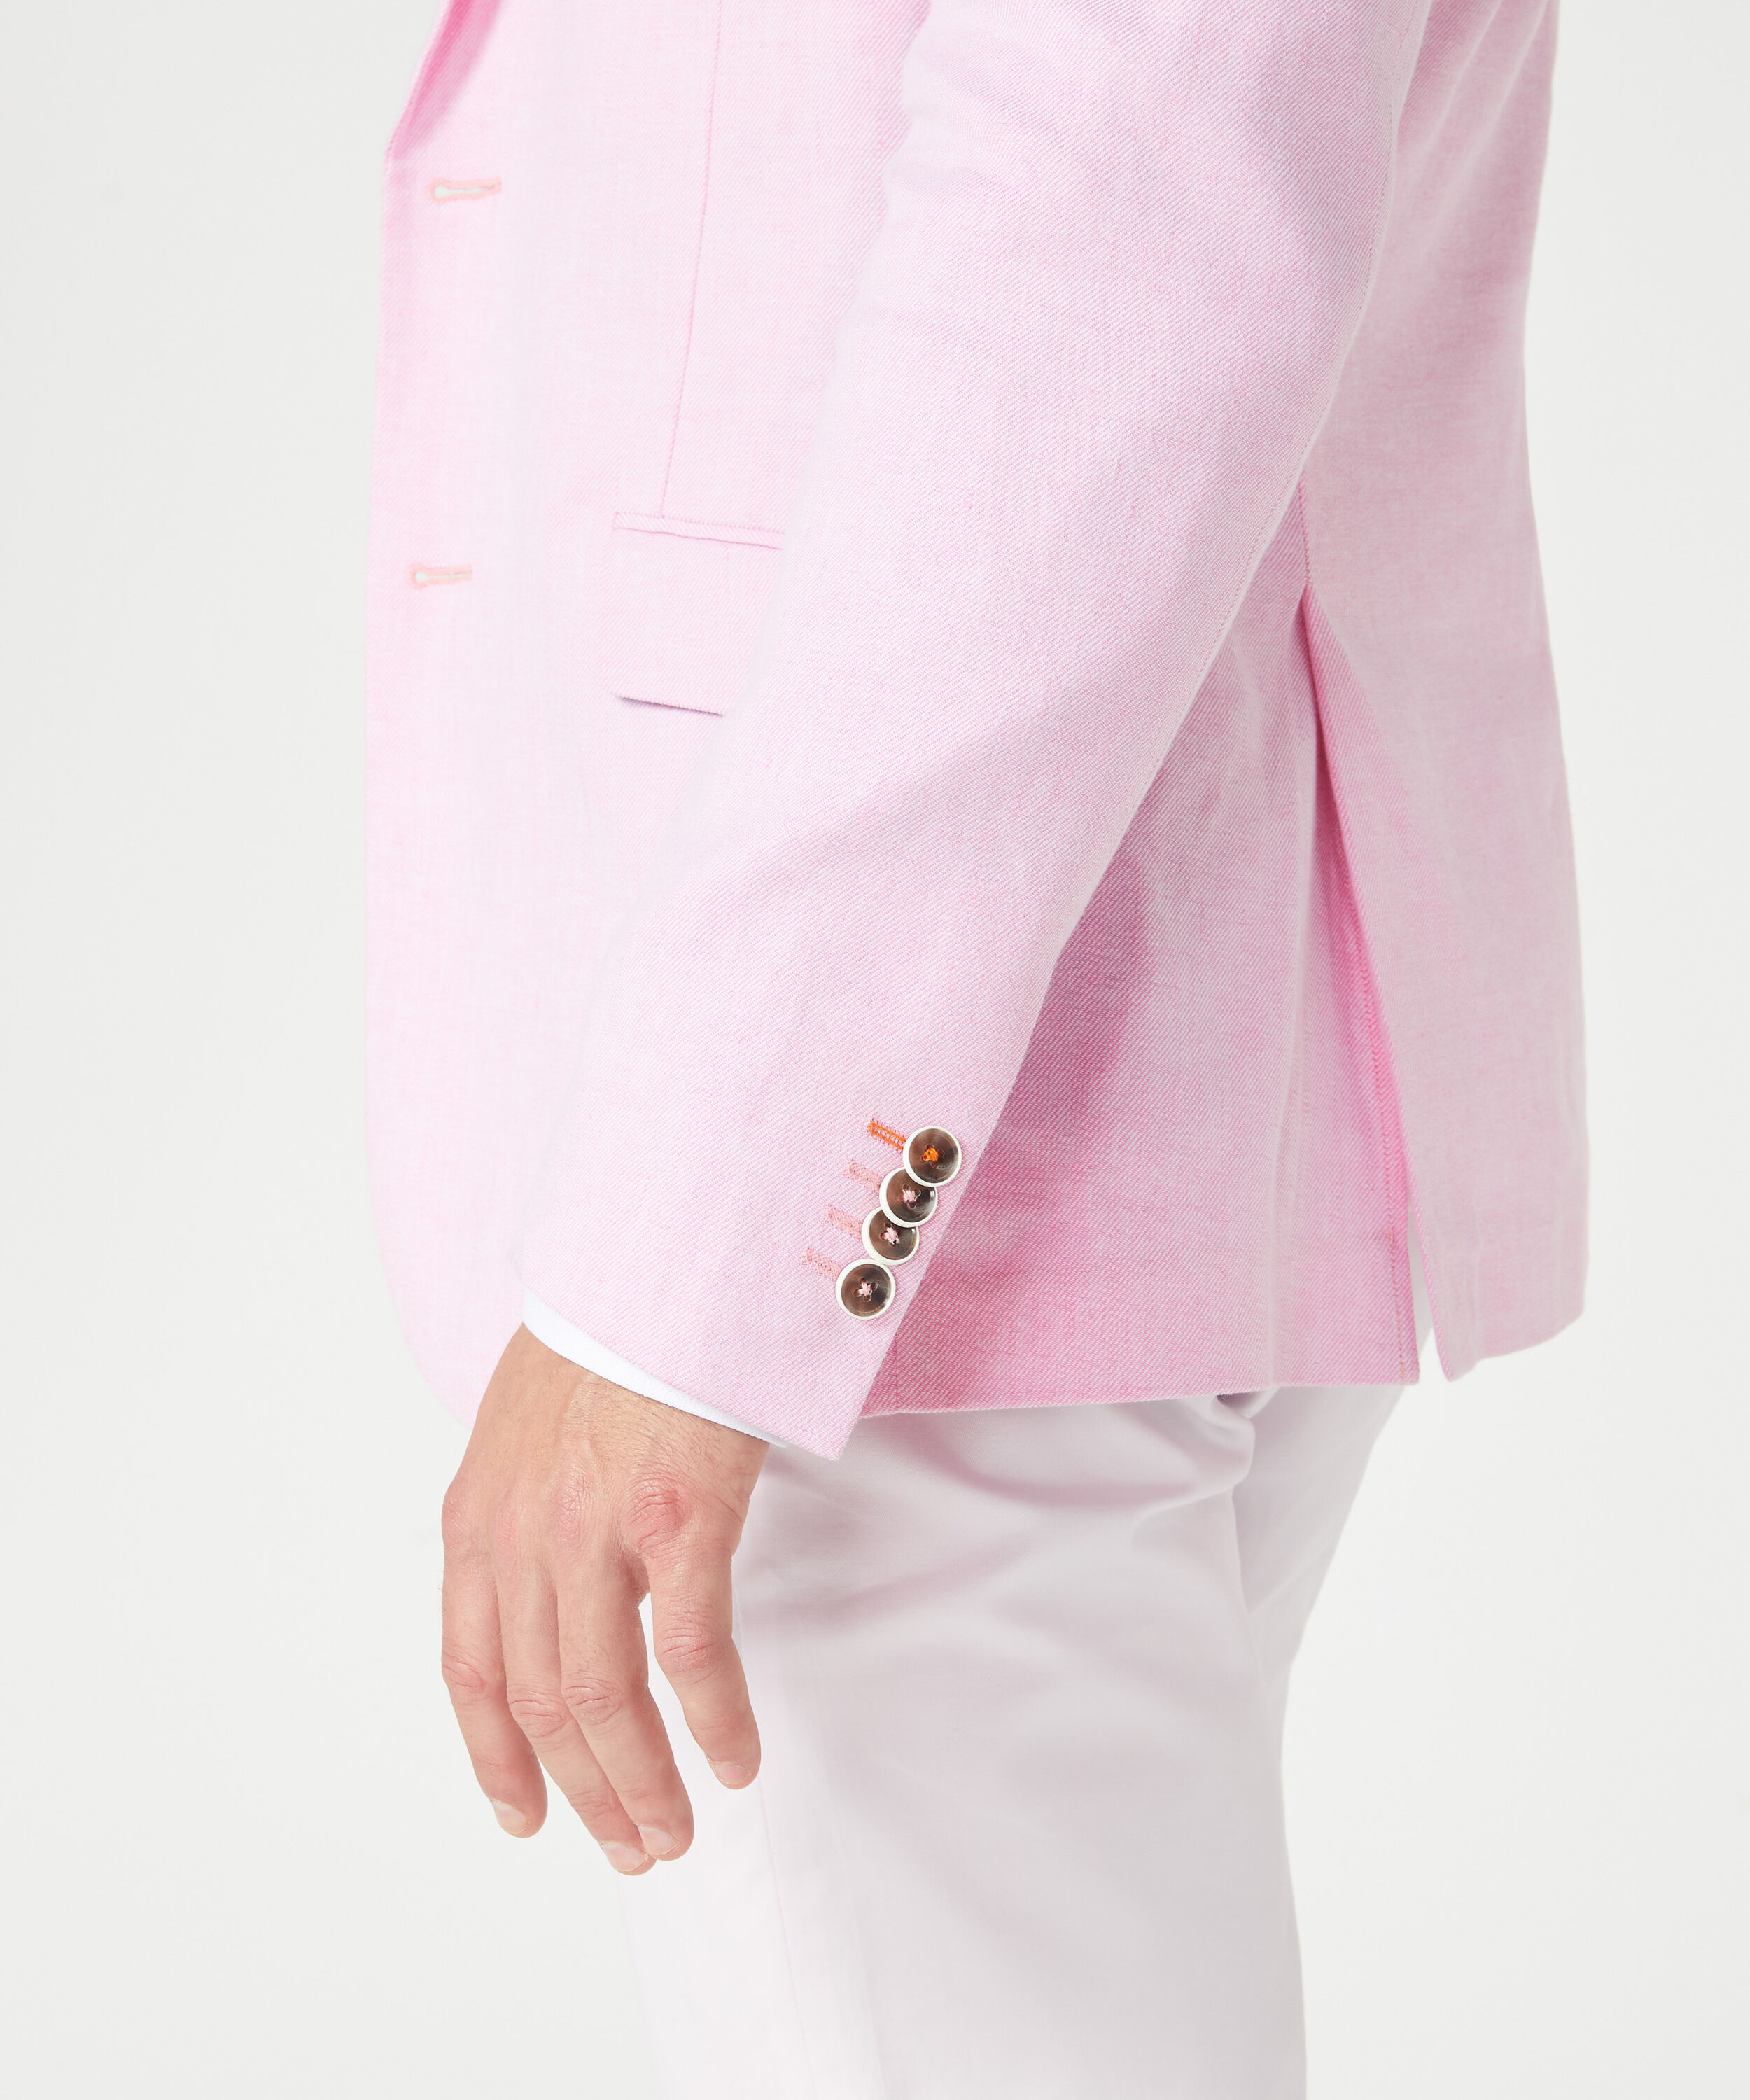 Cascina - Pink - Blazer Cotton Linen Blend, Blazers